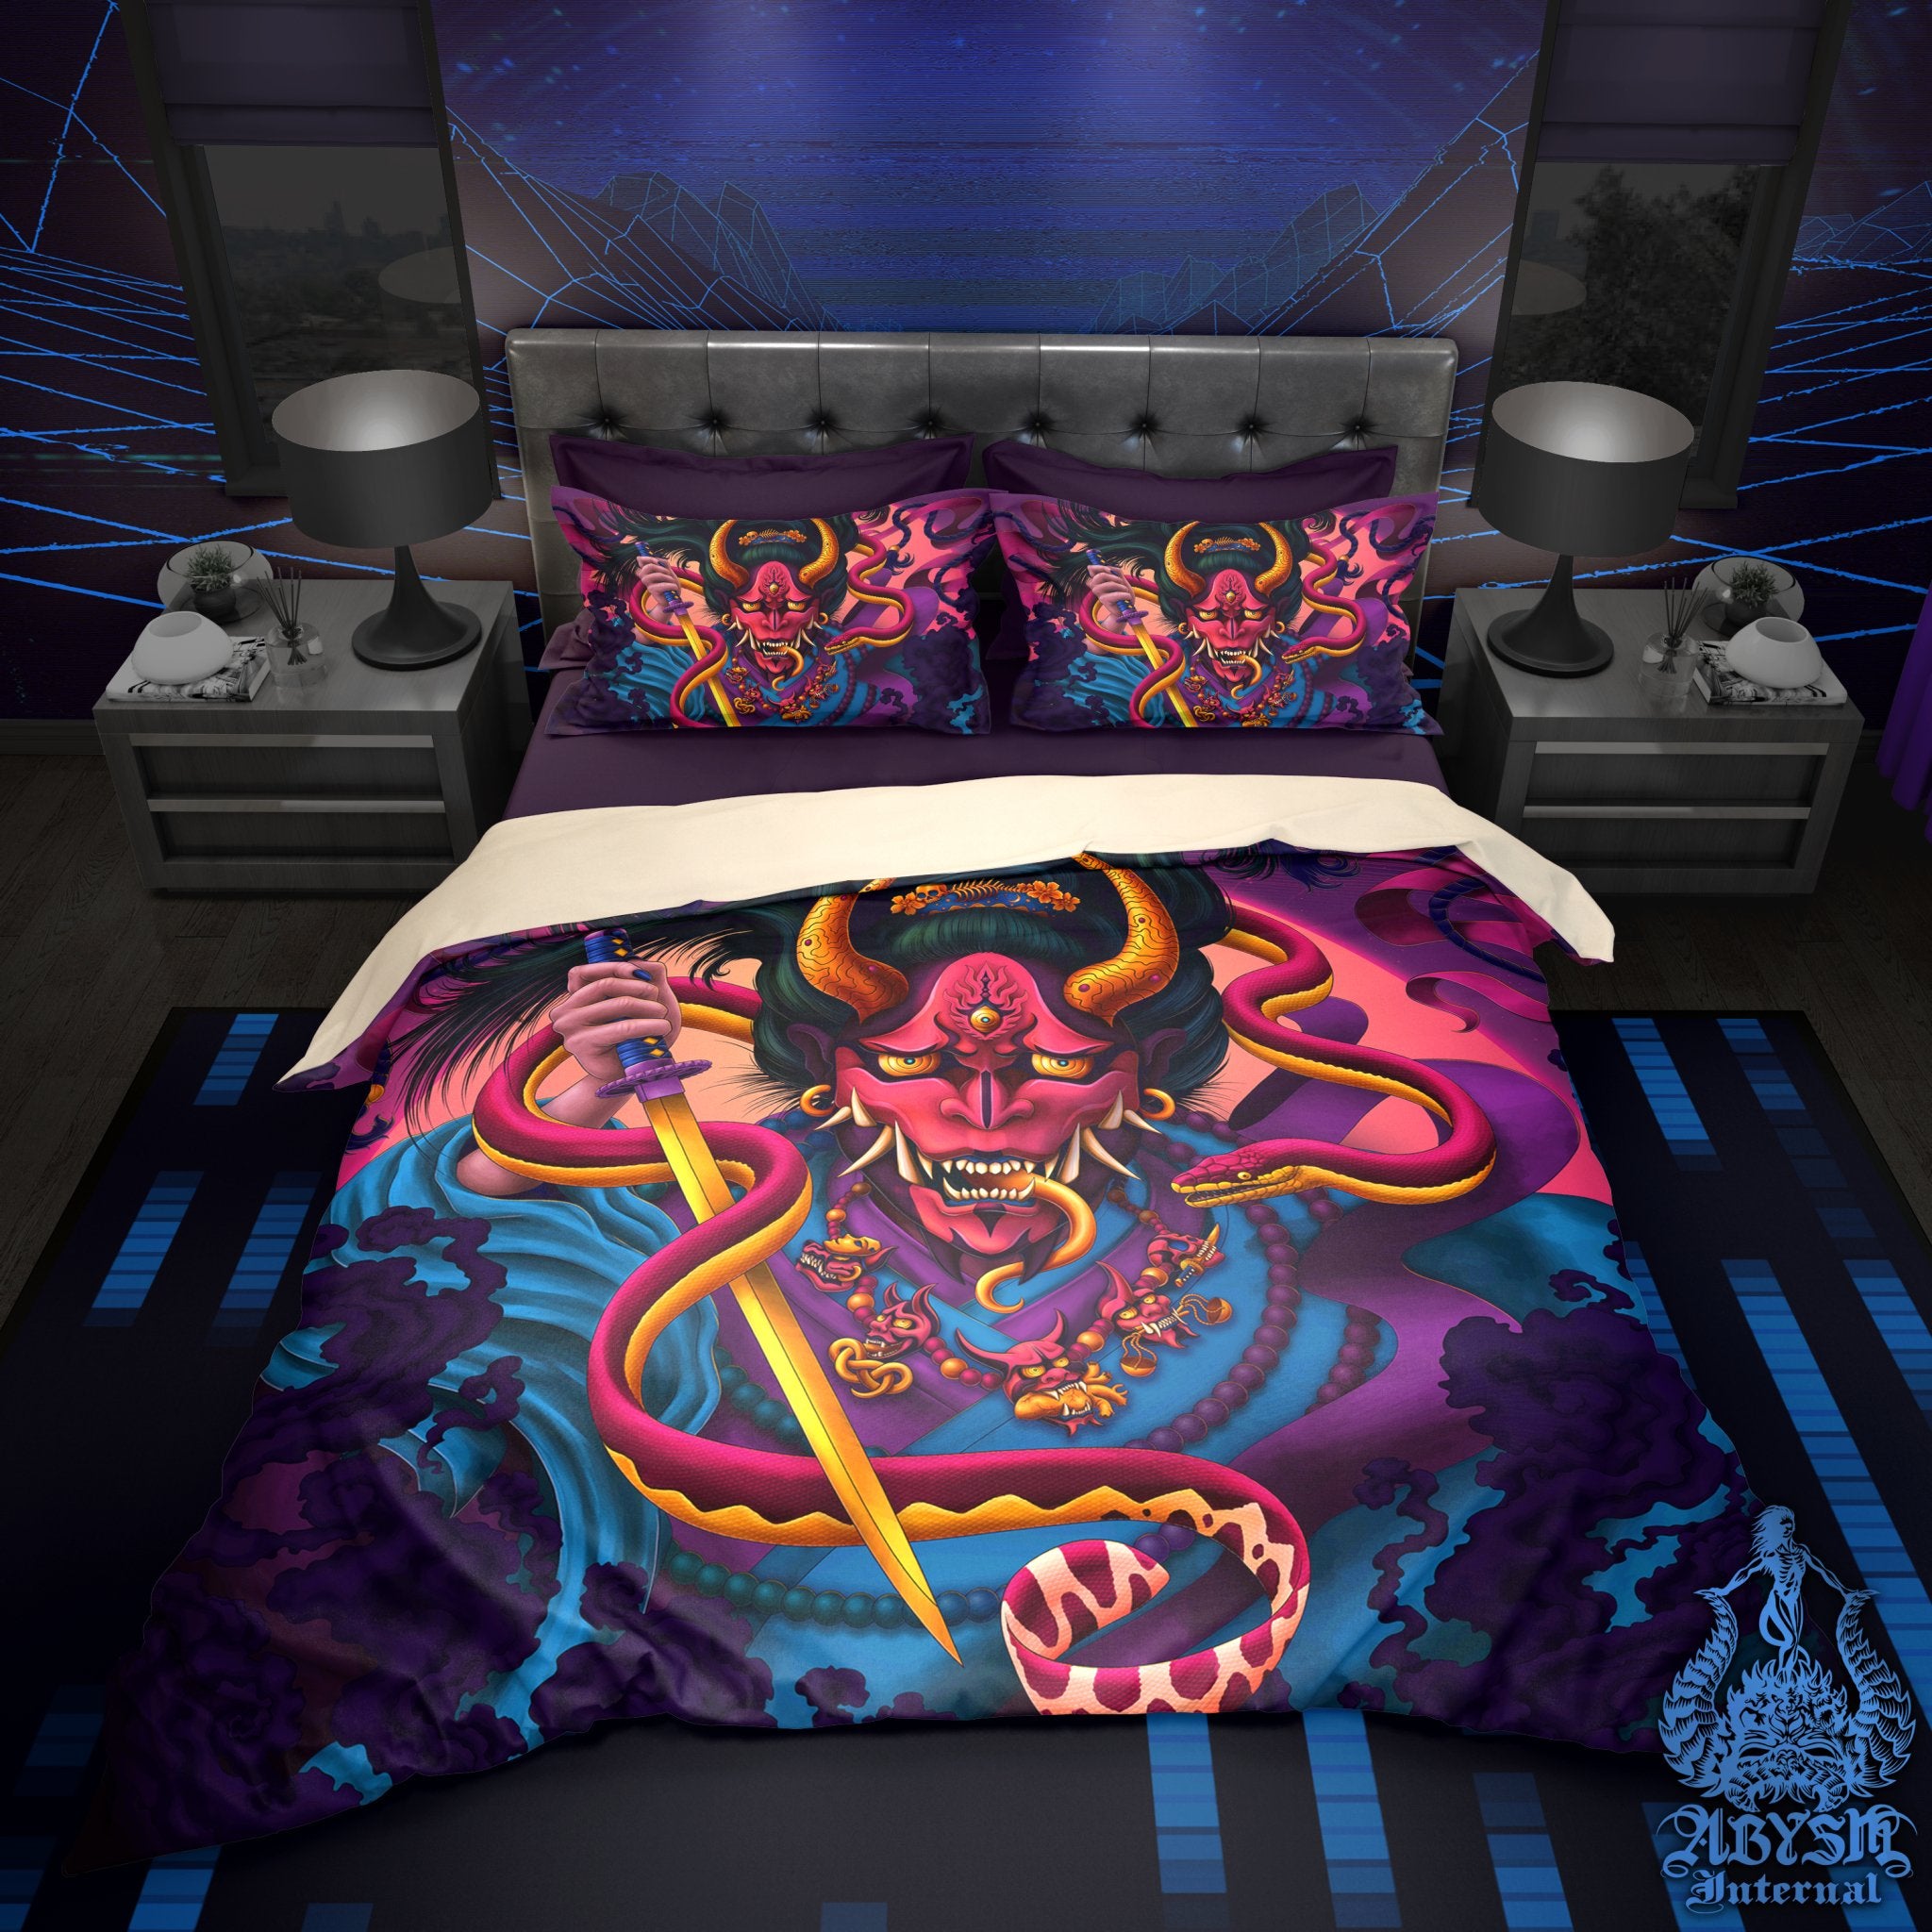 Psychedelic Bedding Set, Comforter or Duvet, Vaporwave Japanese Demon Bed Cover, Anime Bedroom Decor, King, Queen & Twin Size - Snake and Hannya - Abysm Internal